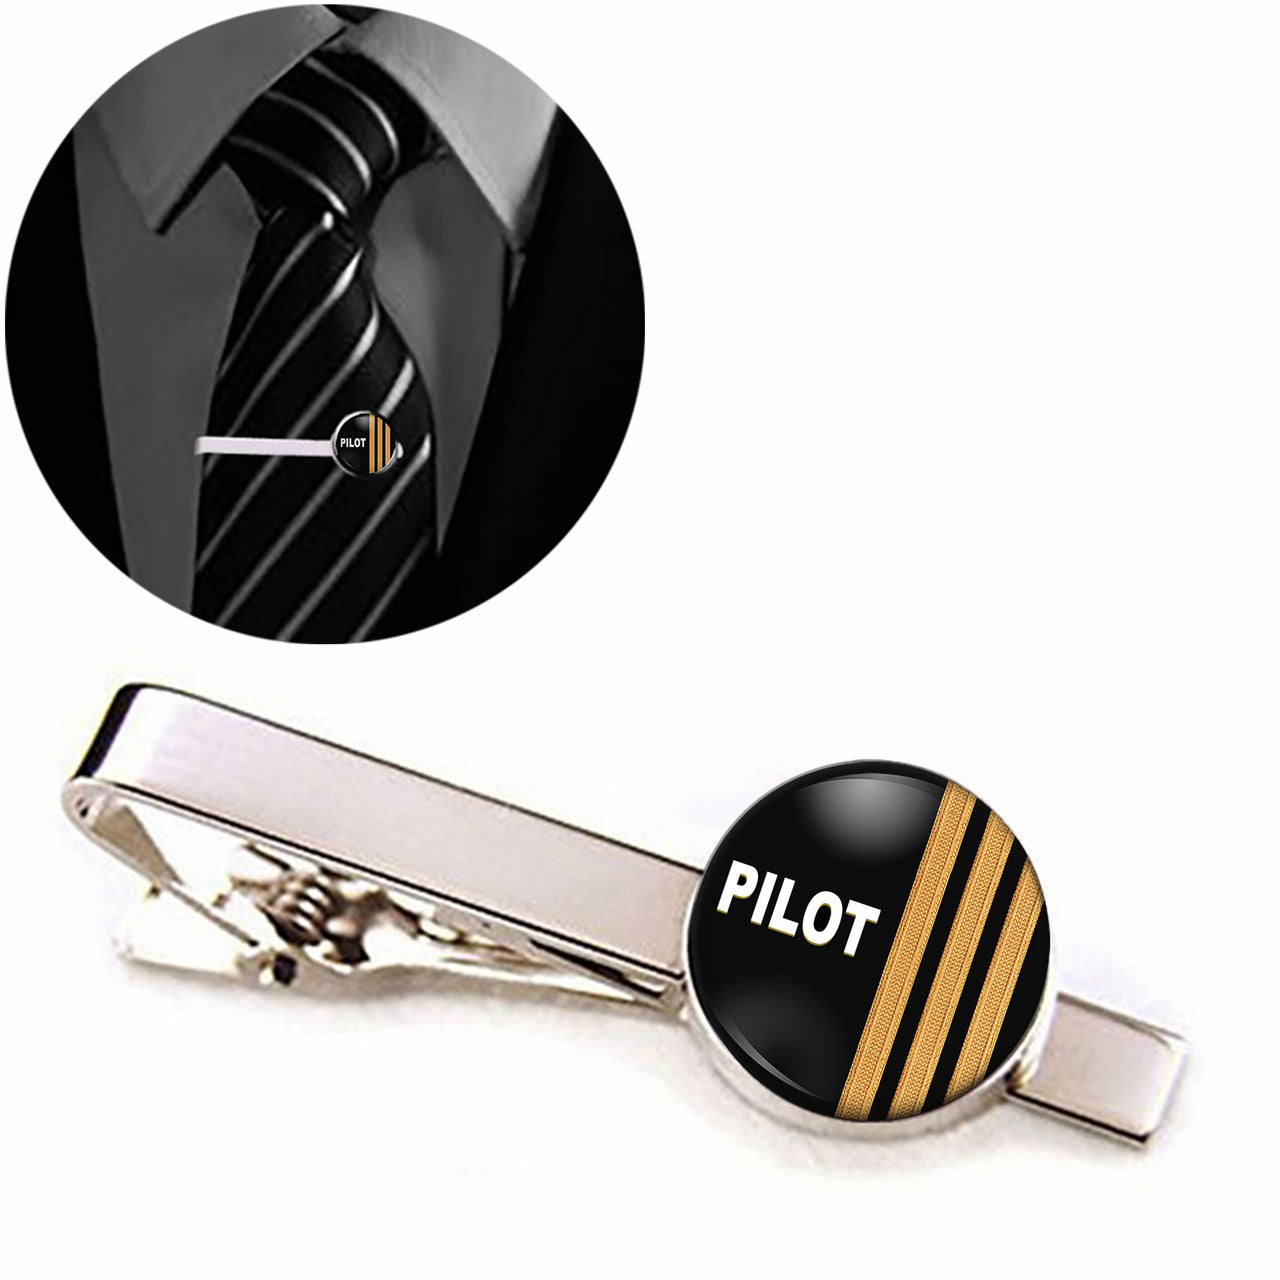 PILOT & Epaulettes 3 Lines Designed Tie Clips